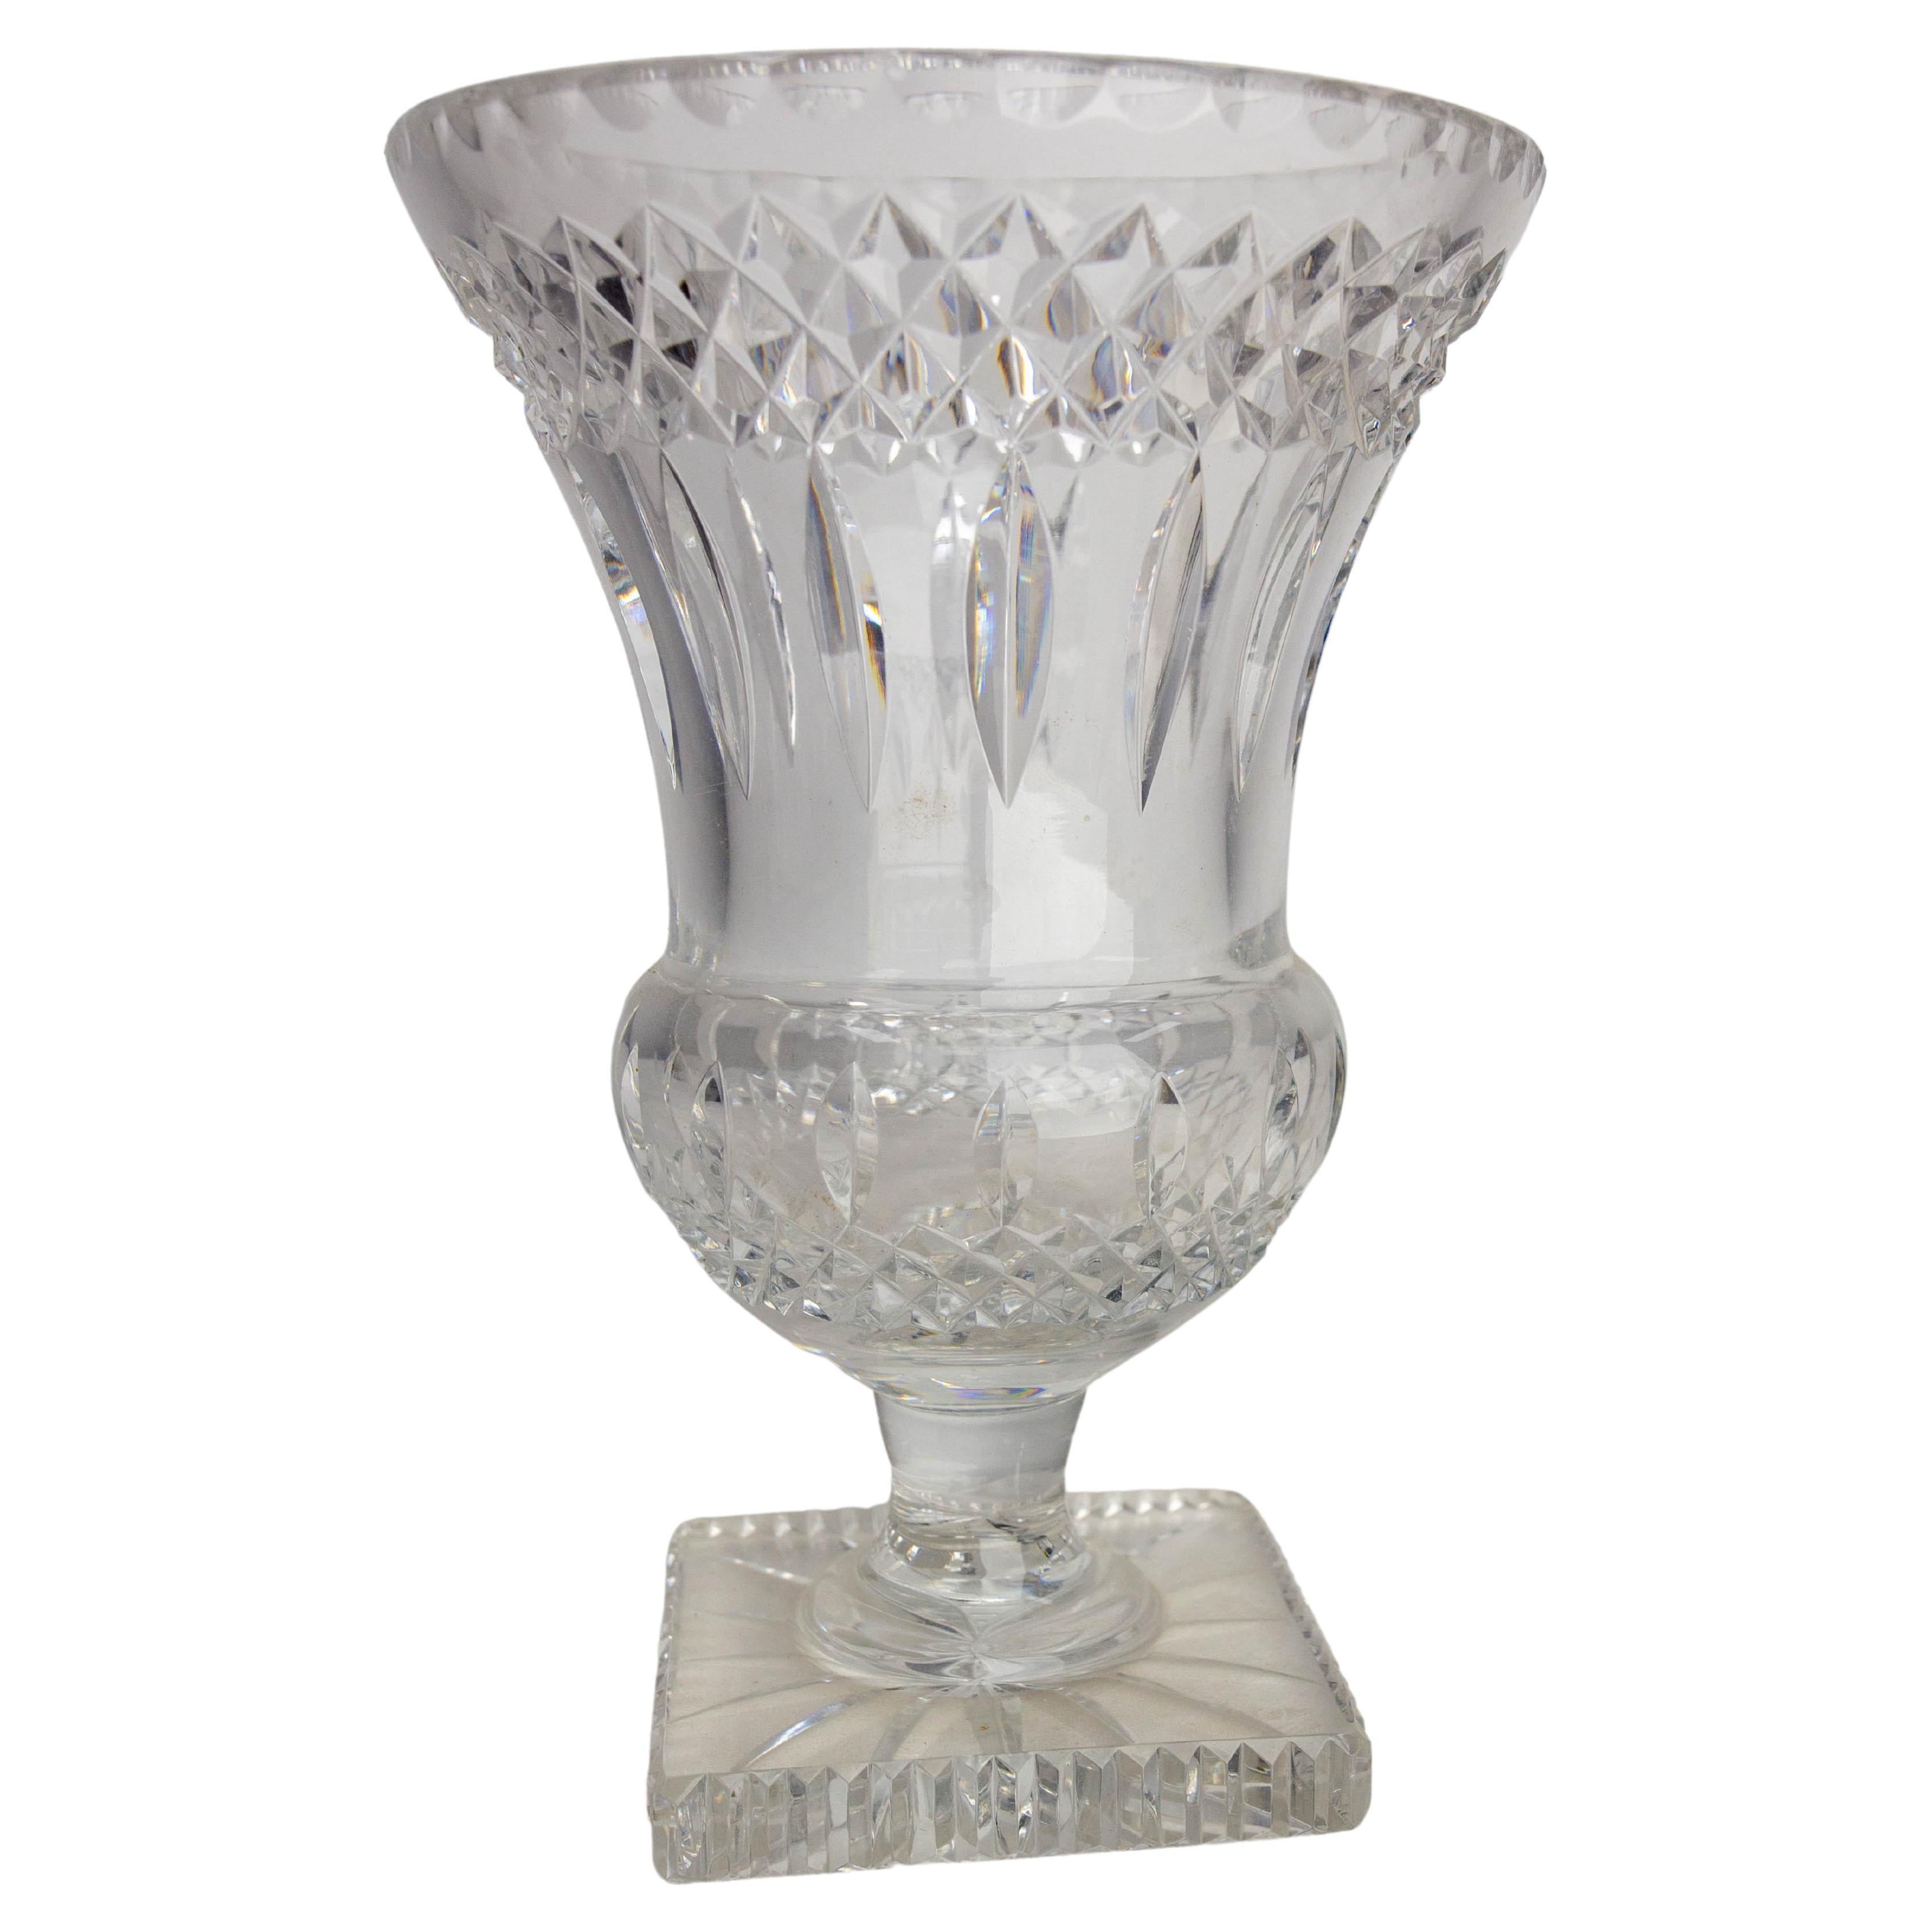 Crystal vase circa 1960, France
Good condition.

Shipping:
15/15/H 21 cm 1.9 kg.